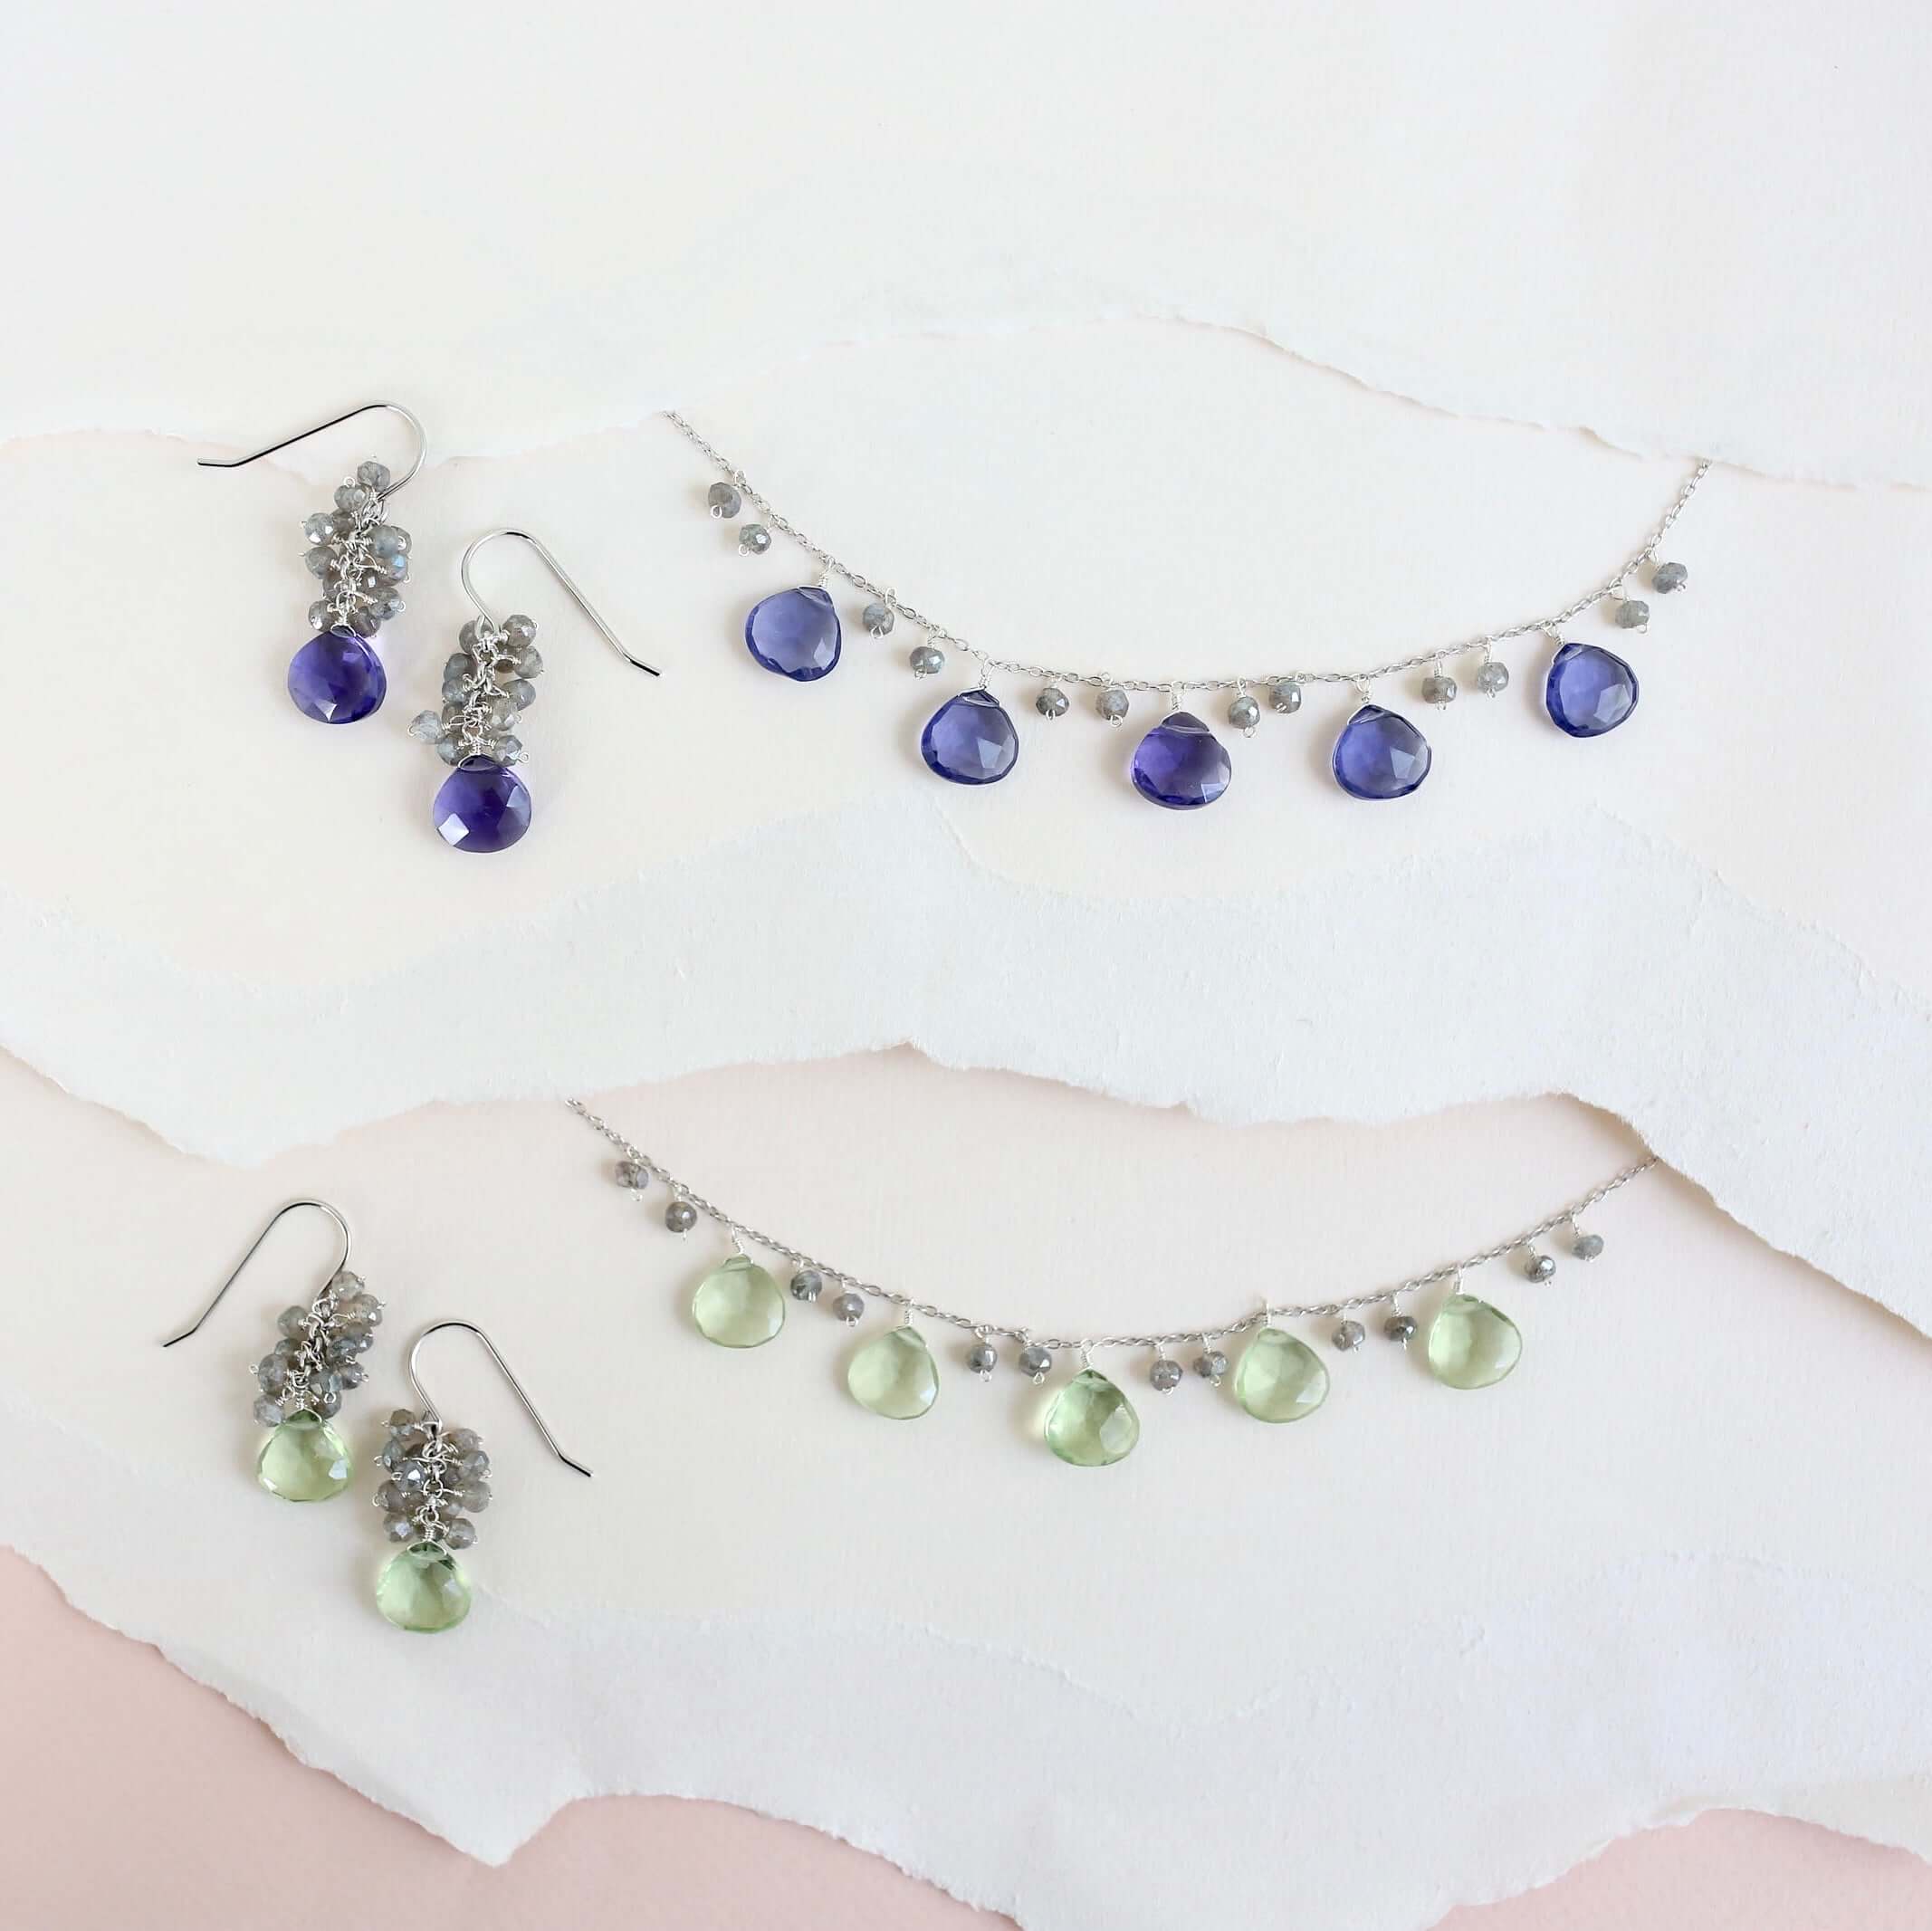 Sparkling Green Amethyst & Labradorite Gems on a Rhodium-Plated Jewelry Set